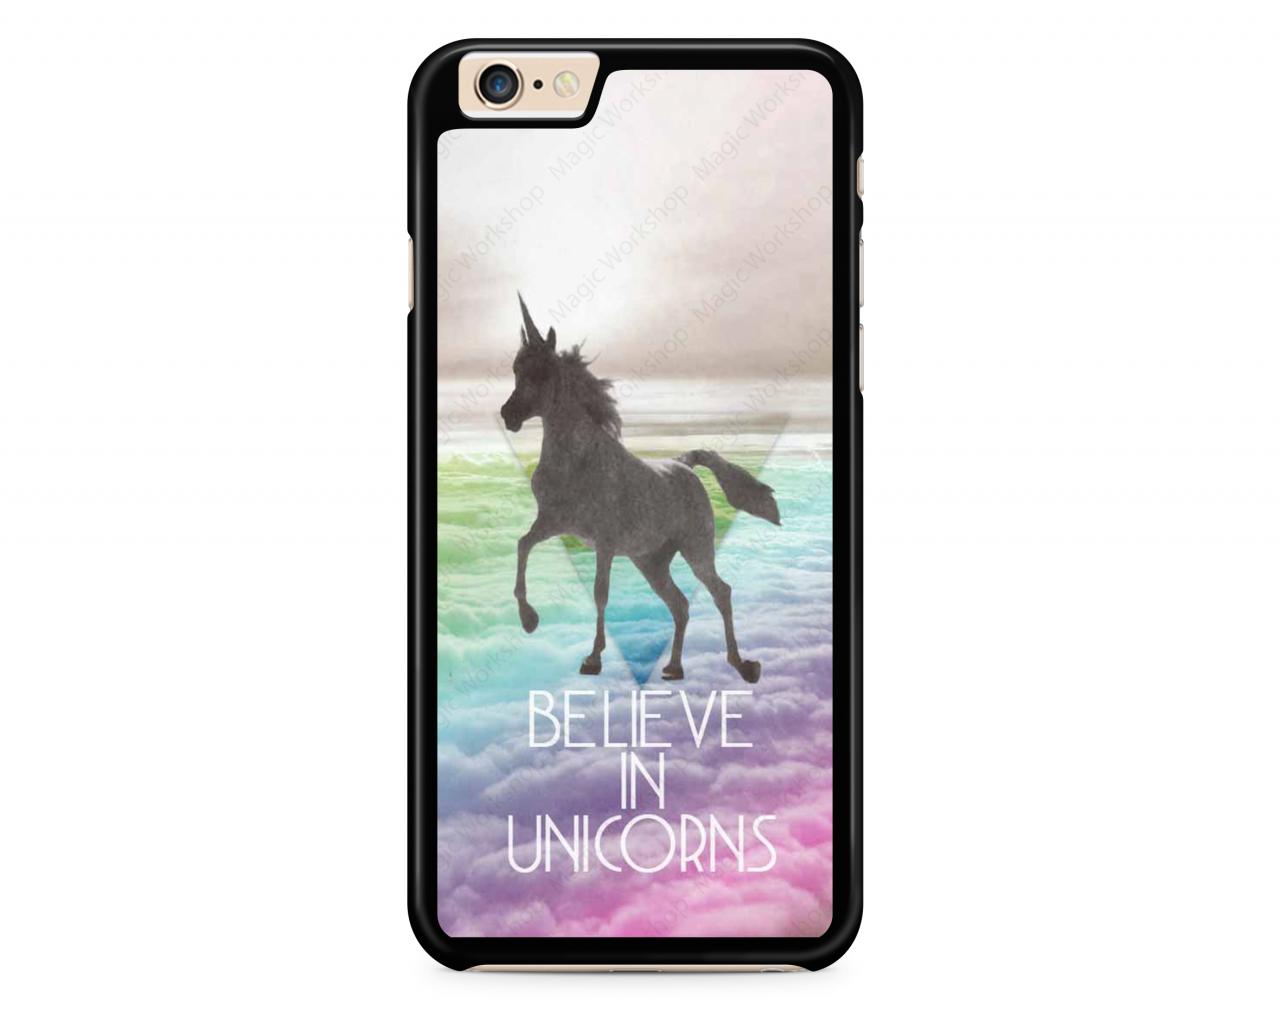 Iphone 4 4s 5 5s 5c Case, Iphone 4 4s 5 5s 5c Cover, Believe In Unicorns